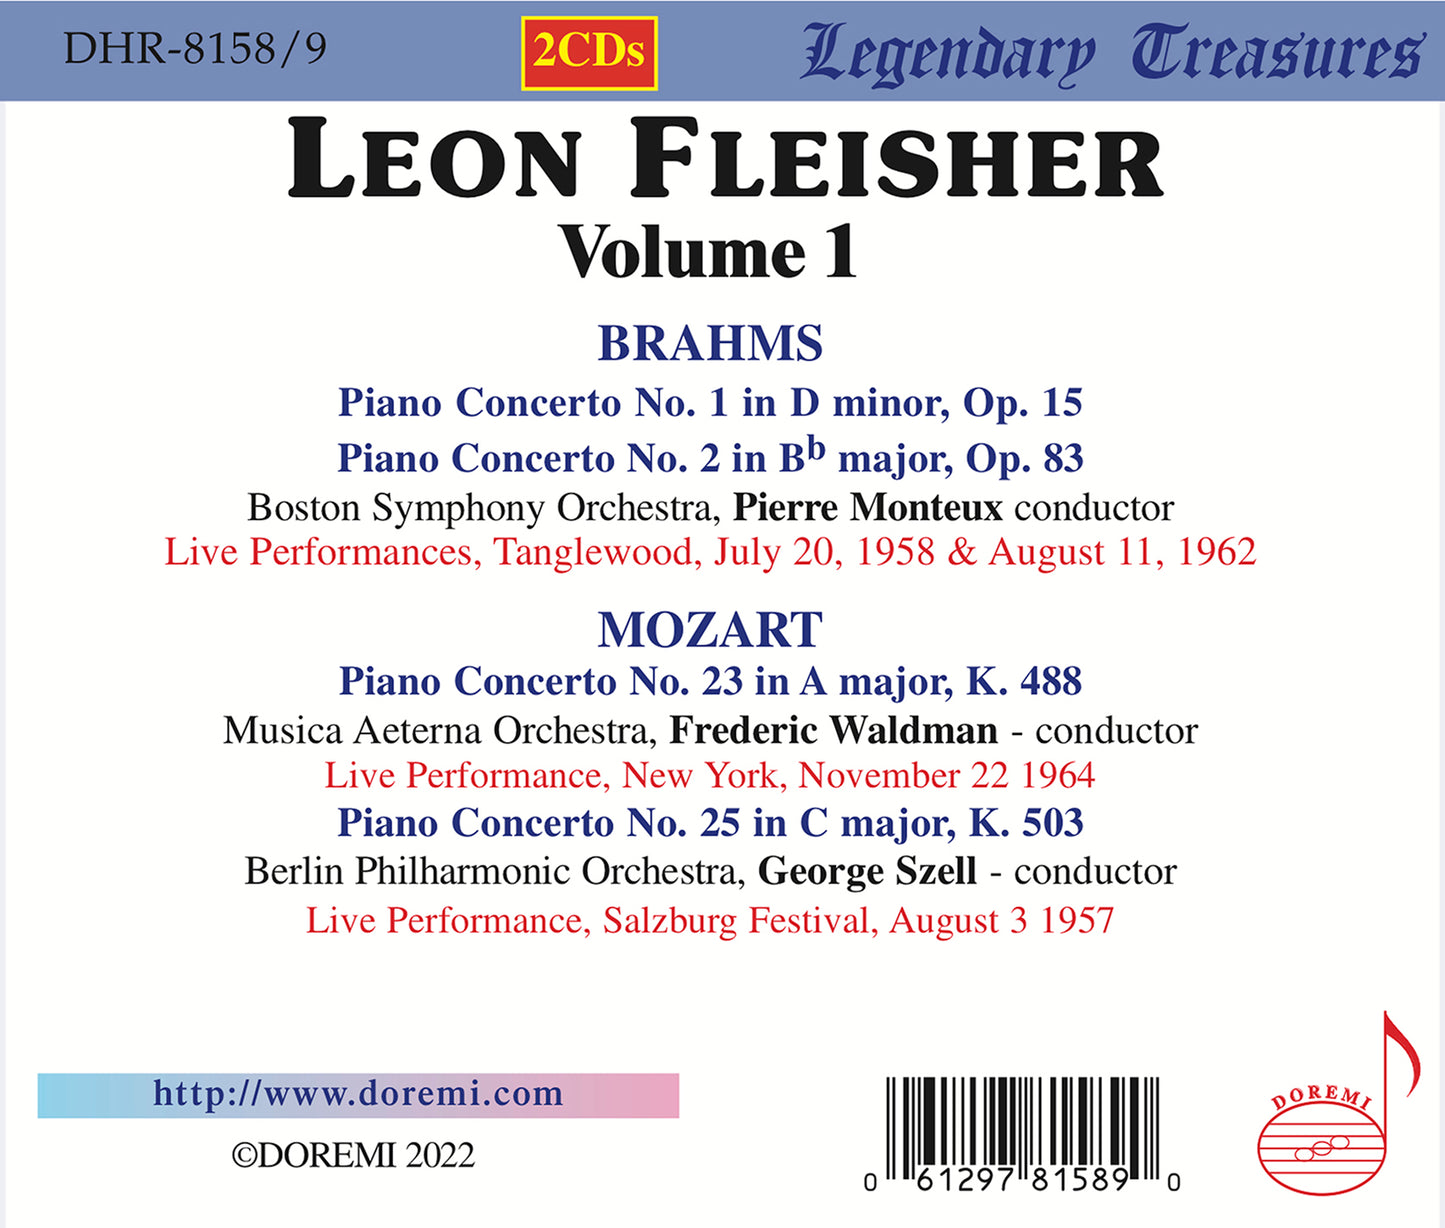 Leon Fleisher Live, Vol. 1